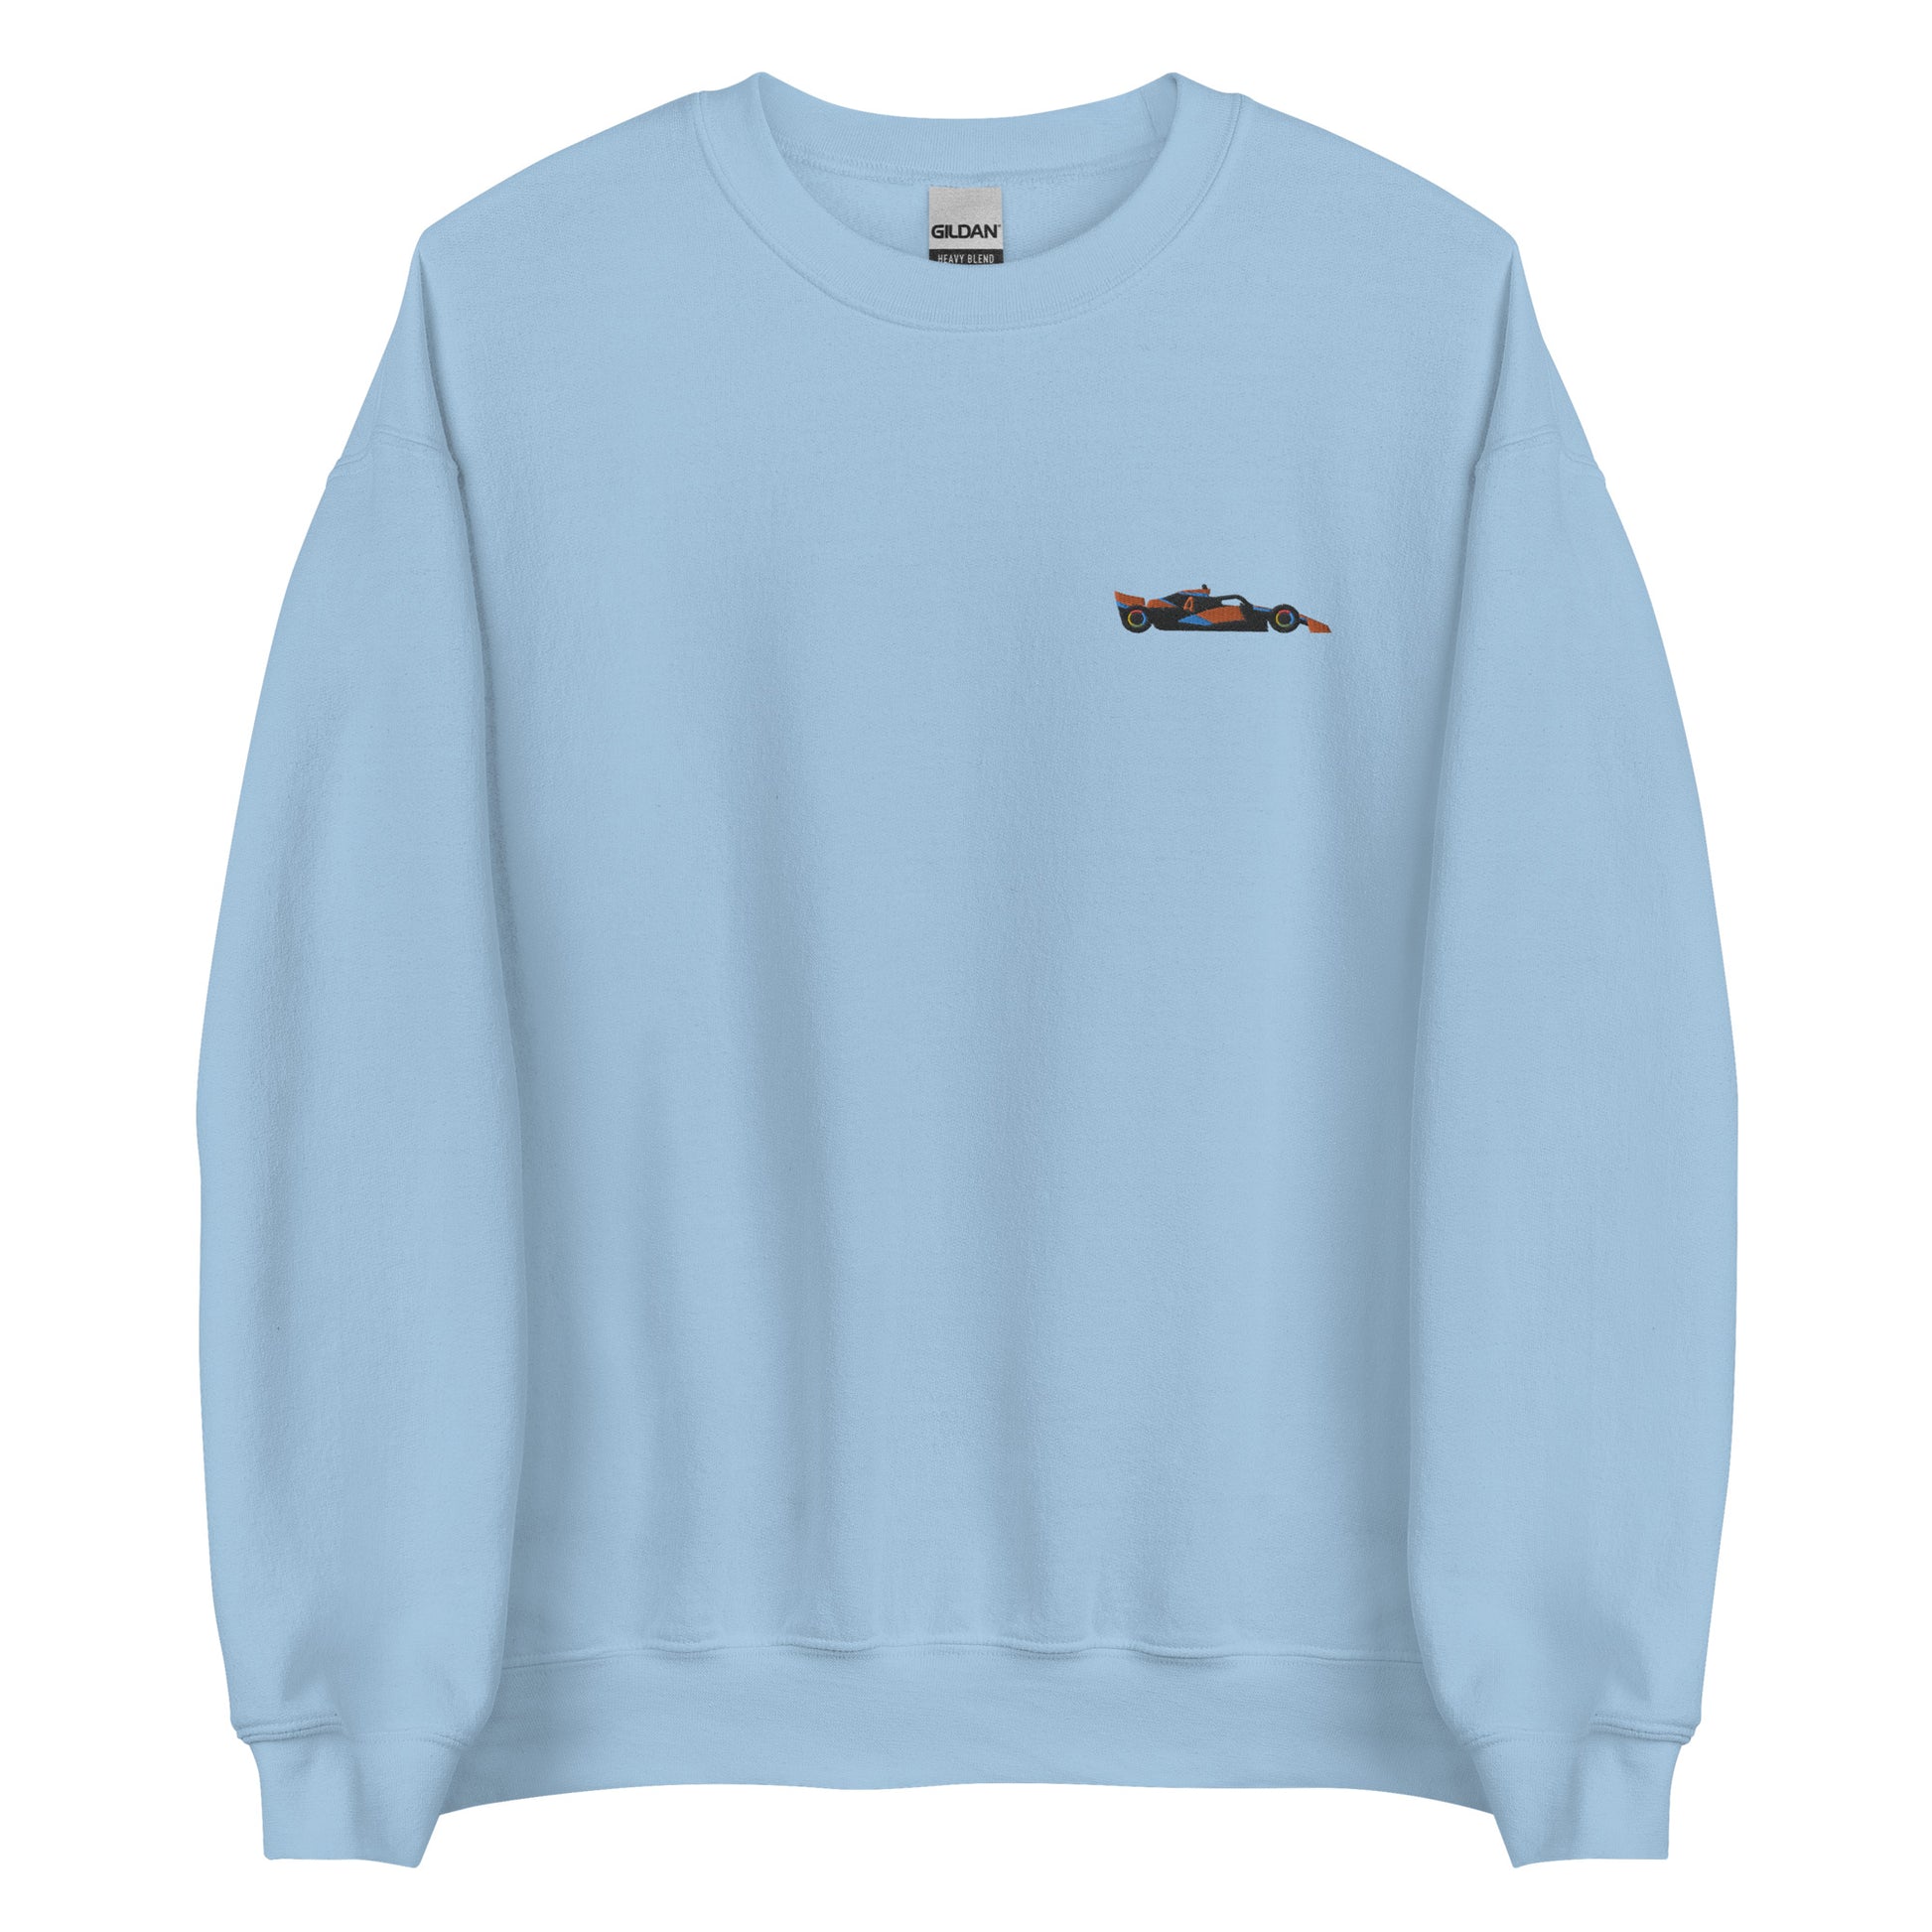 Embroidered mclaren f1 car sweater blue